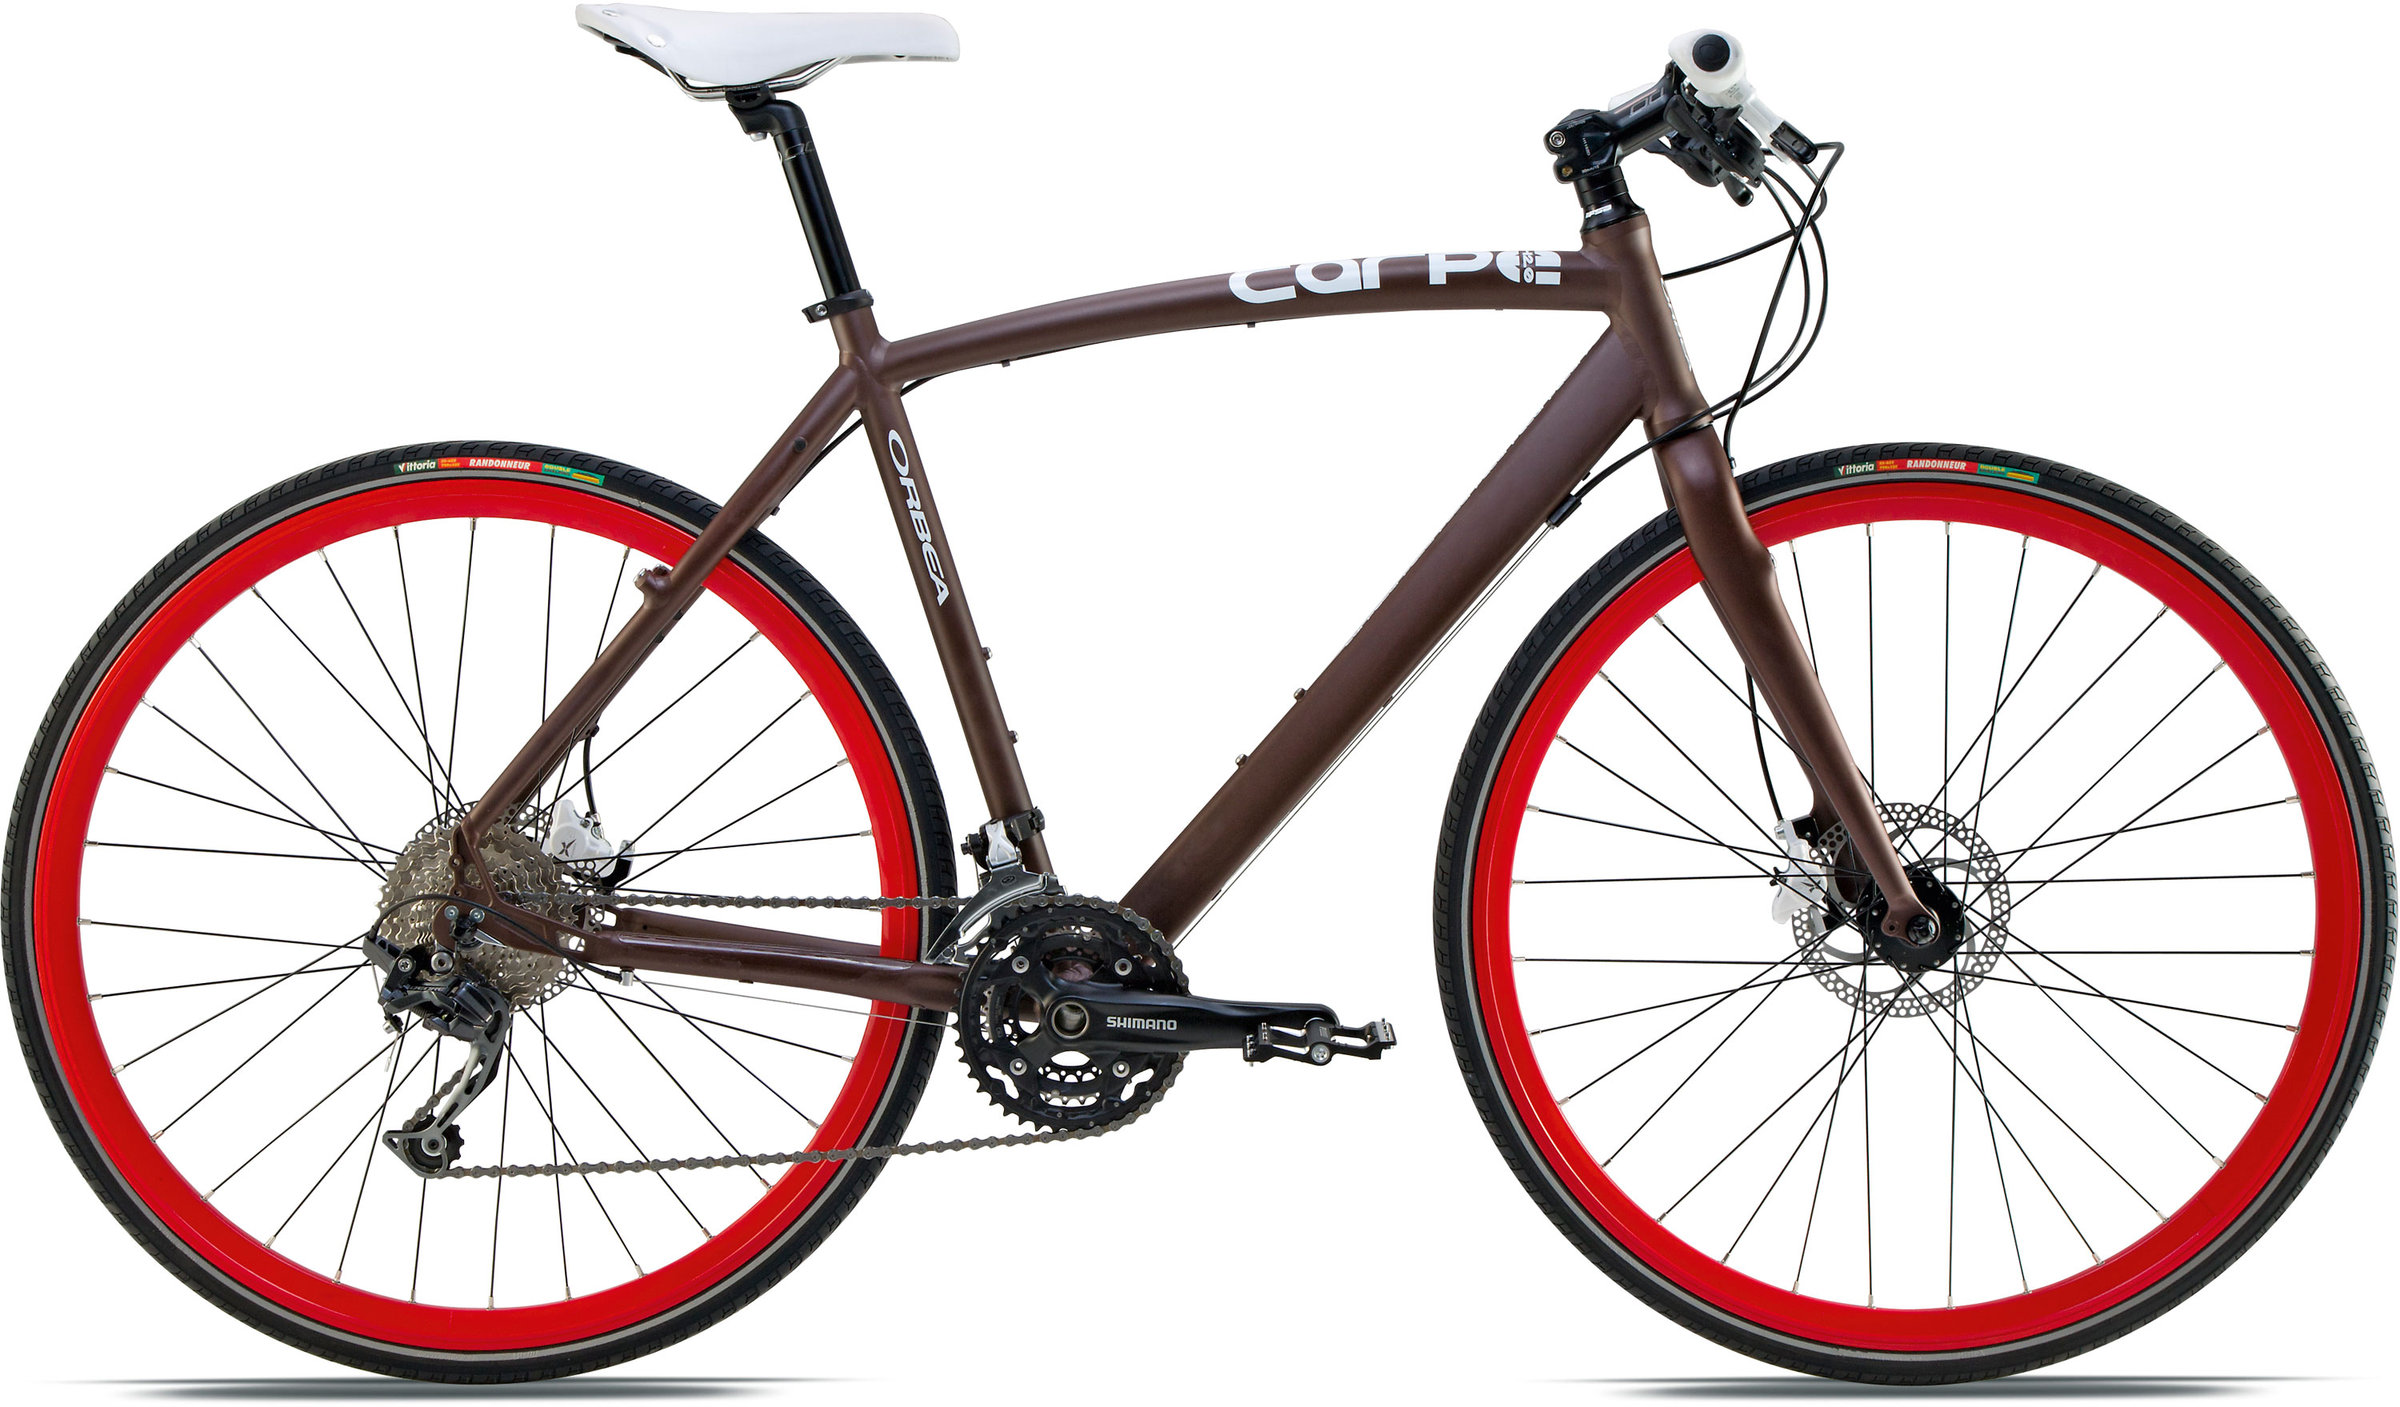 2012 Orbea Carpe H20 - Bicycle Details 